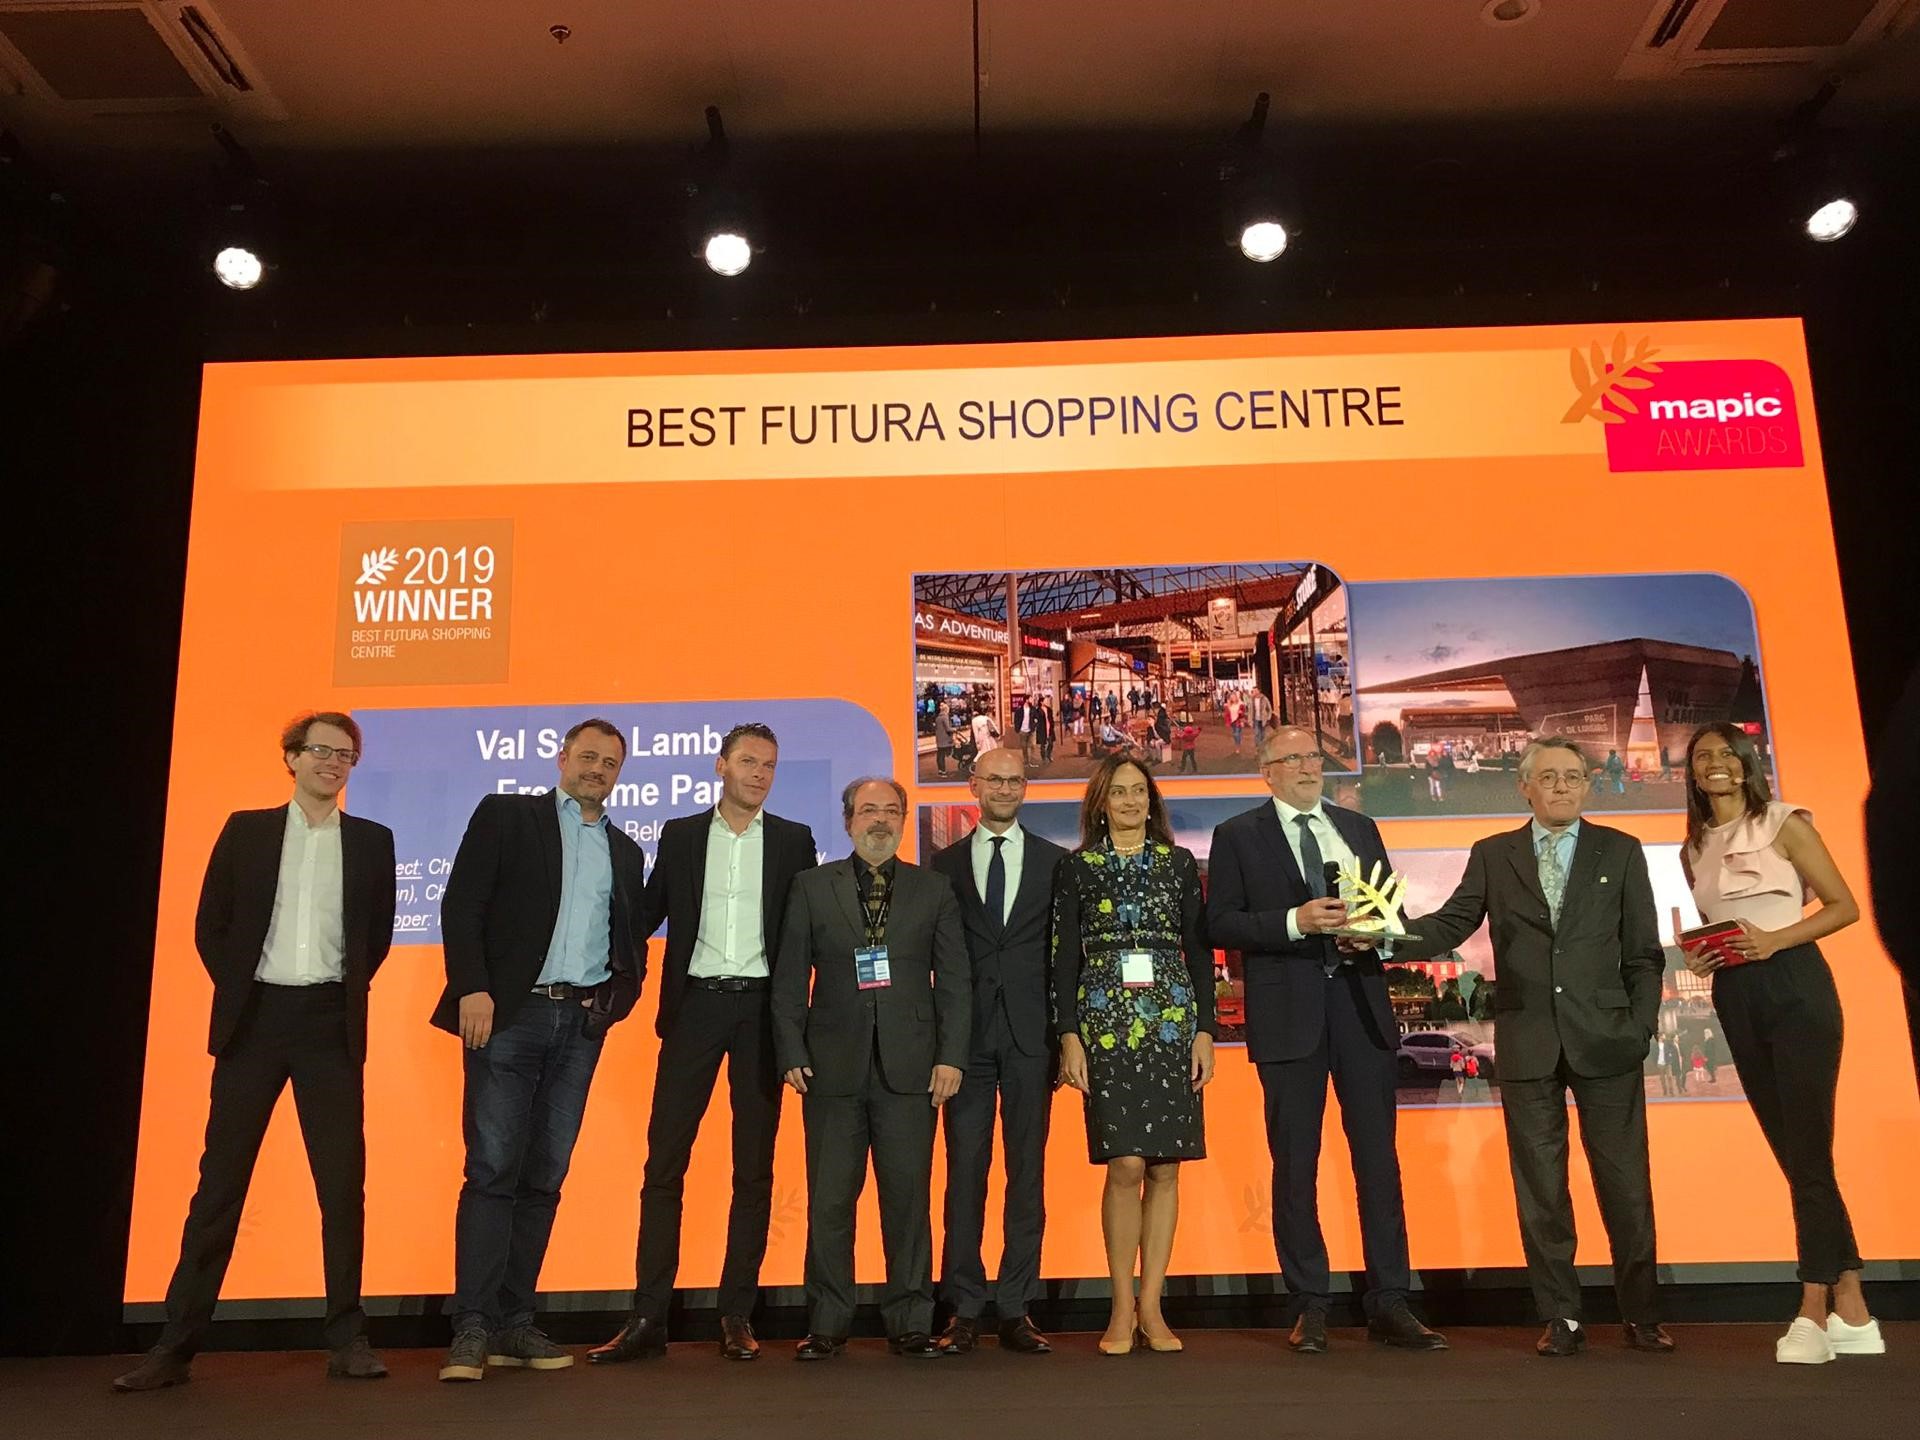 Best Futura Shopping Center - Mapic 2019